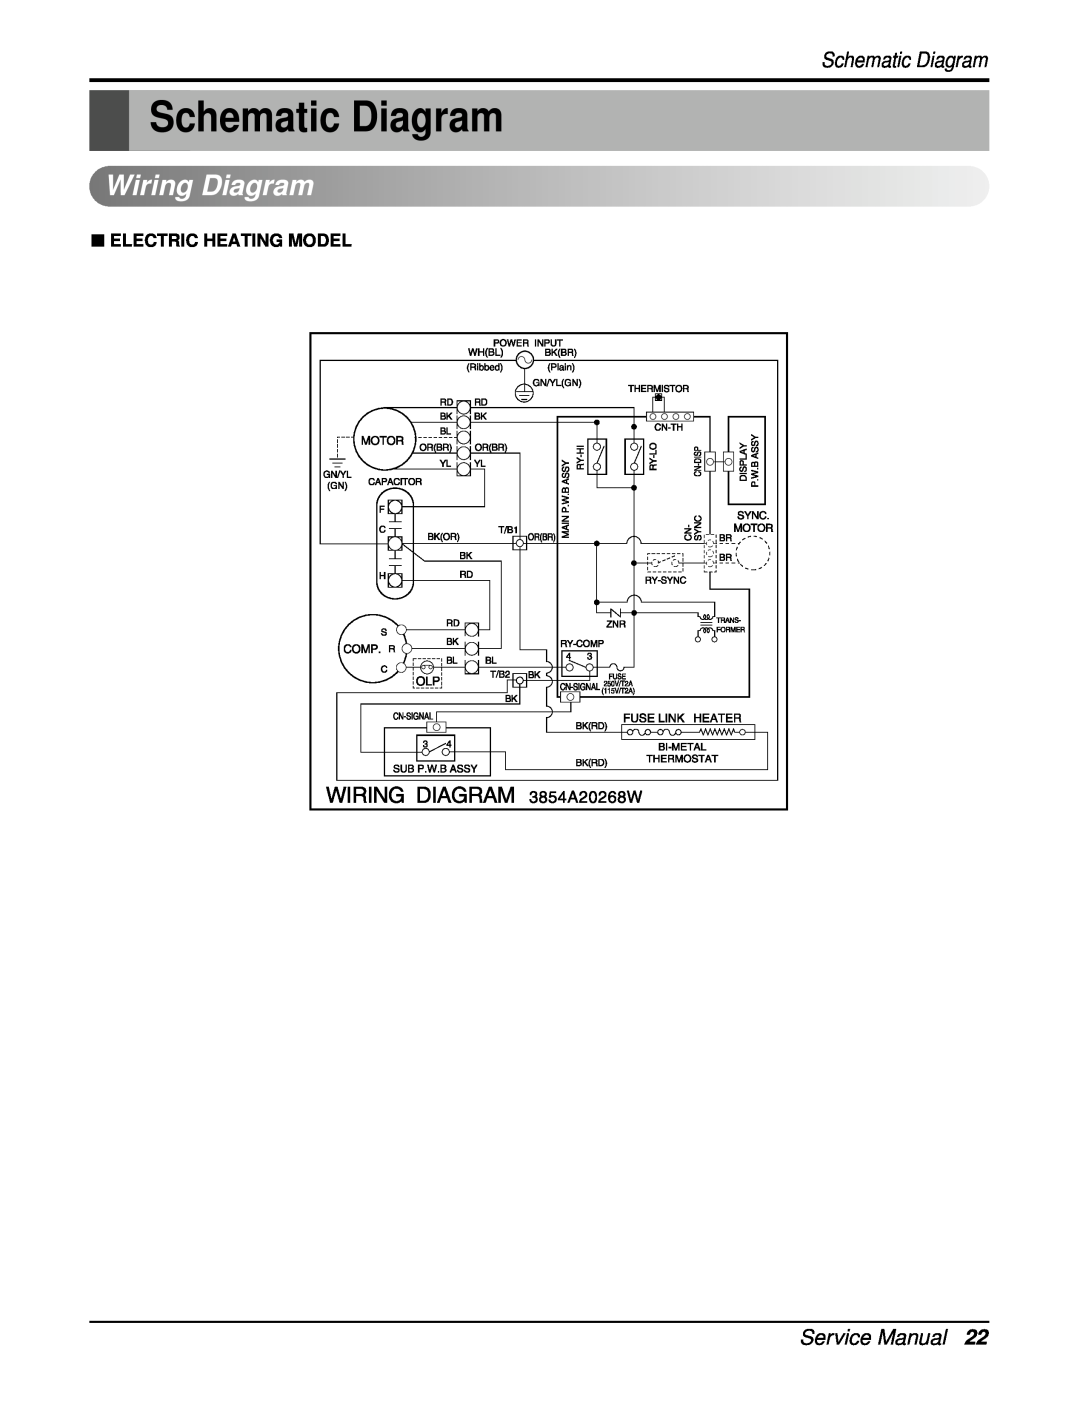 Heat Controller REG-183A, REG-243A manual Schematic Diagram, Wiring Diagram 